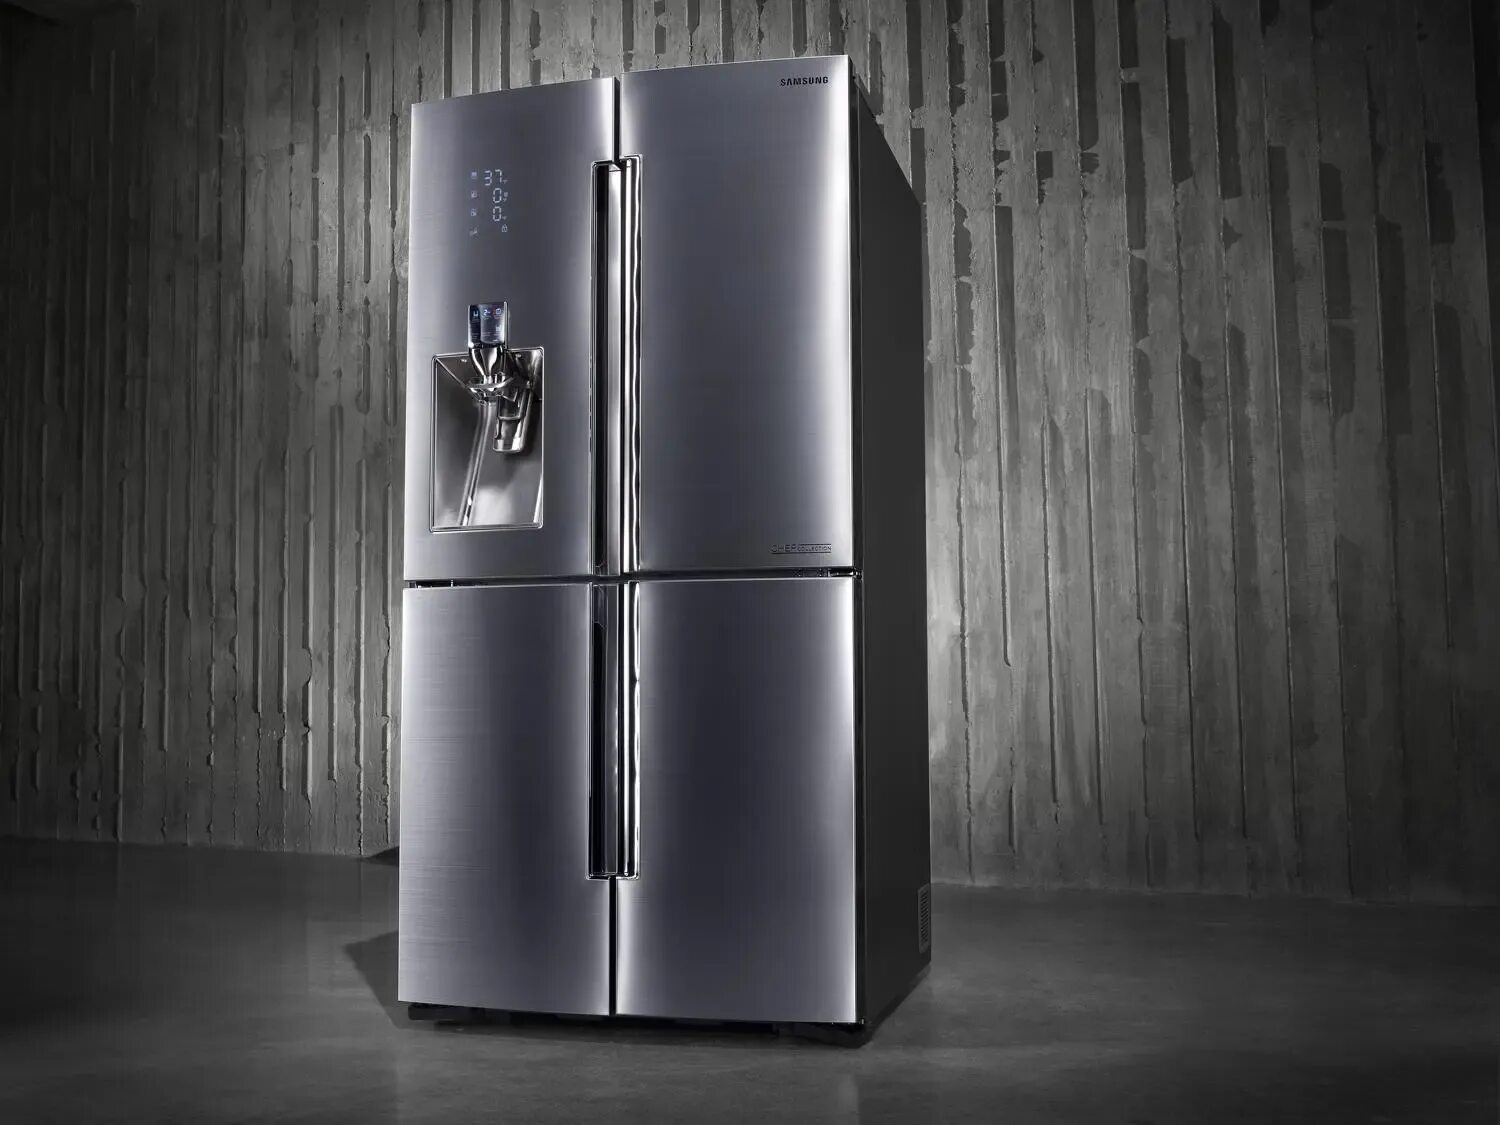 Новые модели холодильников. Холодильник Haier HRF-541dm7ru. Холодильник Samsung rsj1kers. Многодверный Haier hb18fgwaaaru. Холодильник (Side-by-Side) LG GC-q247cbdc.